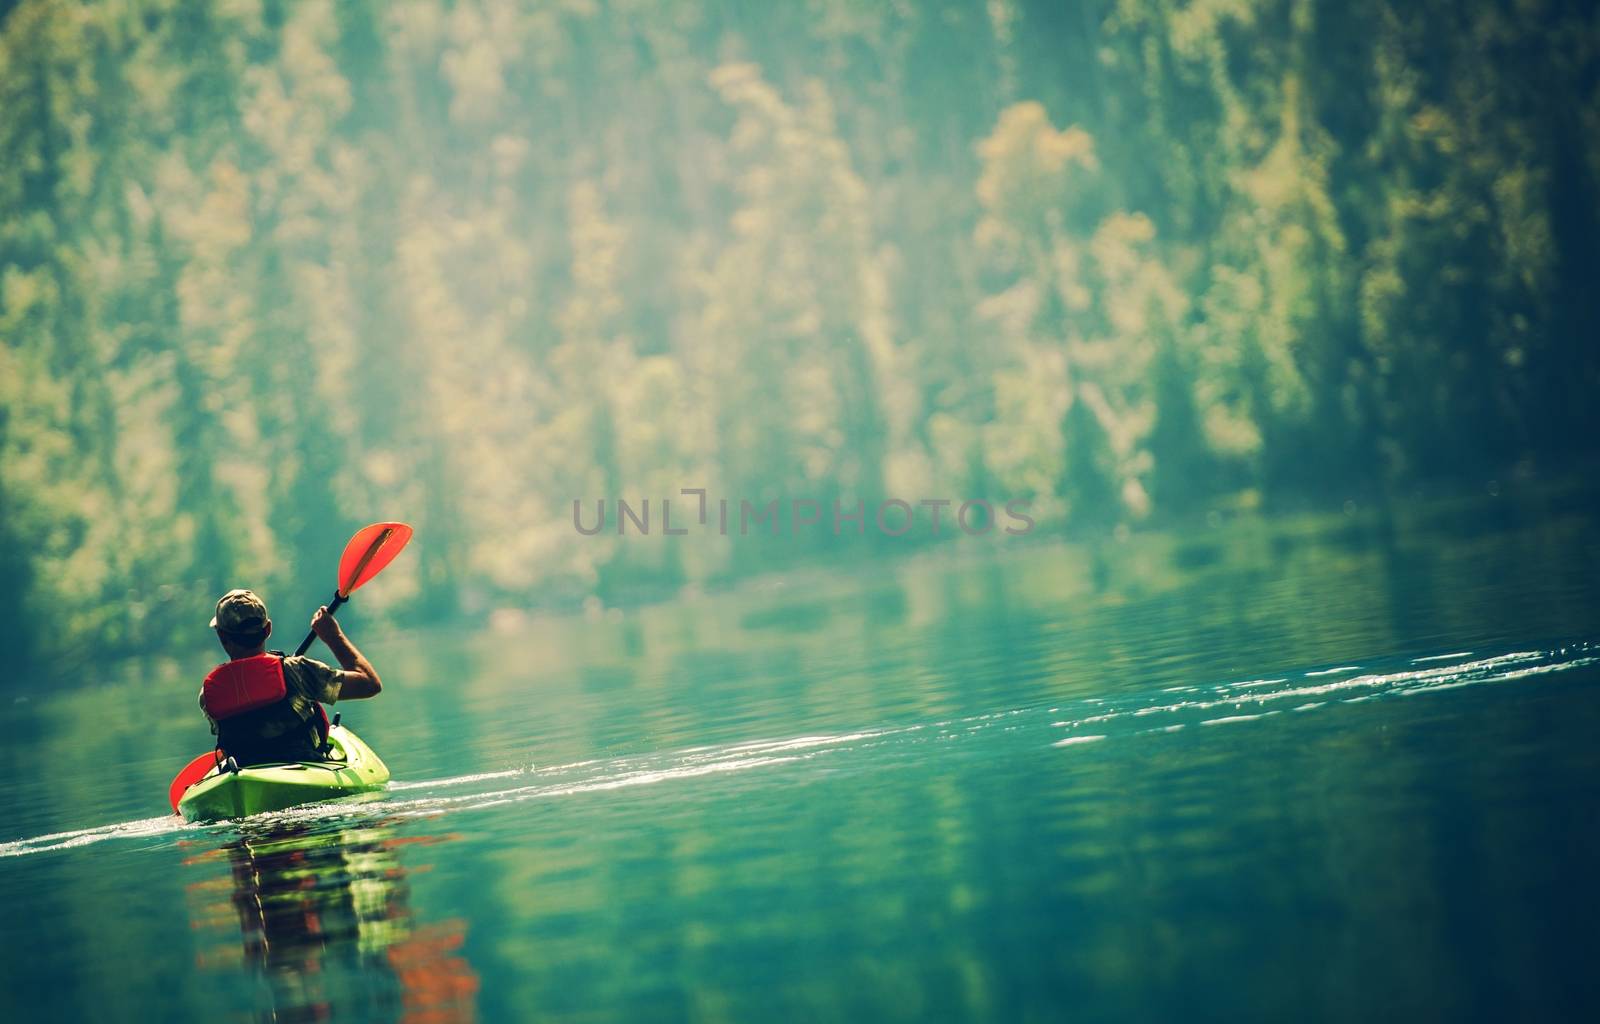 Scenic Kayak Lake Tour by welcomia